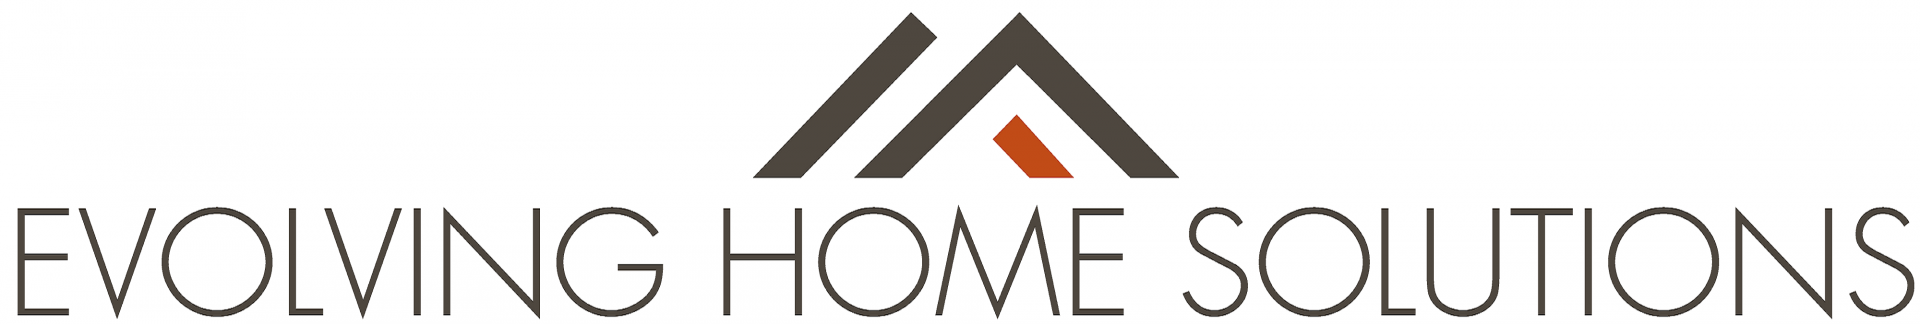 Evolving Home Solutions  logo